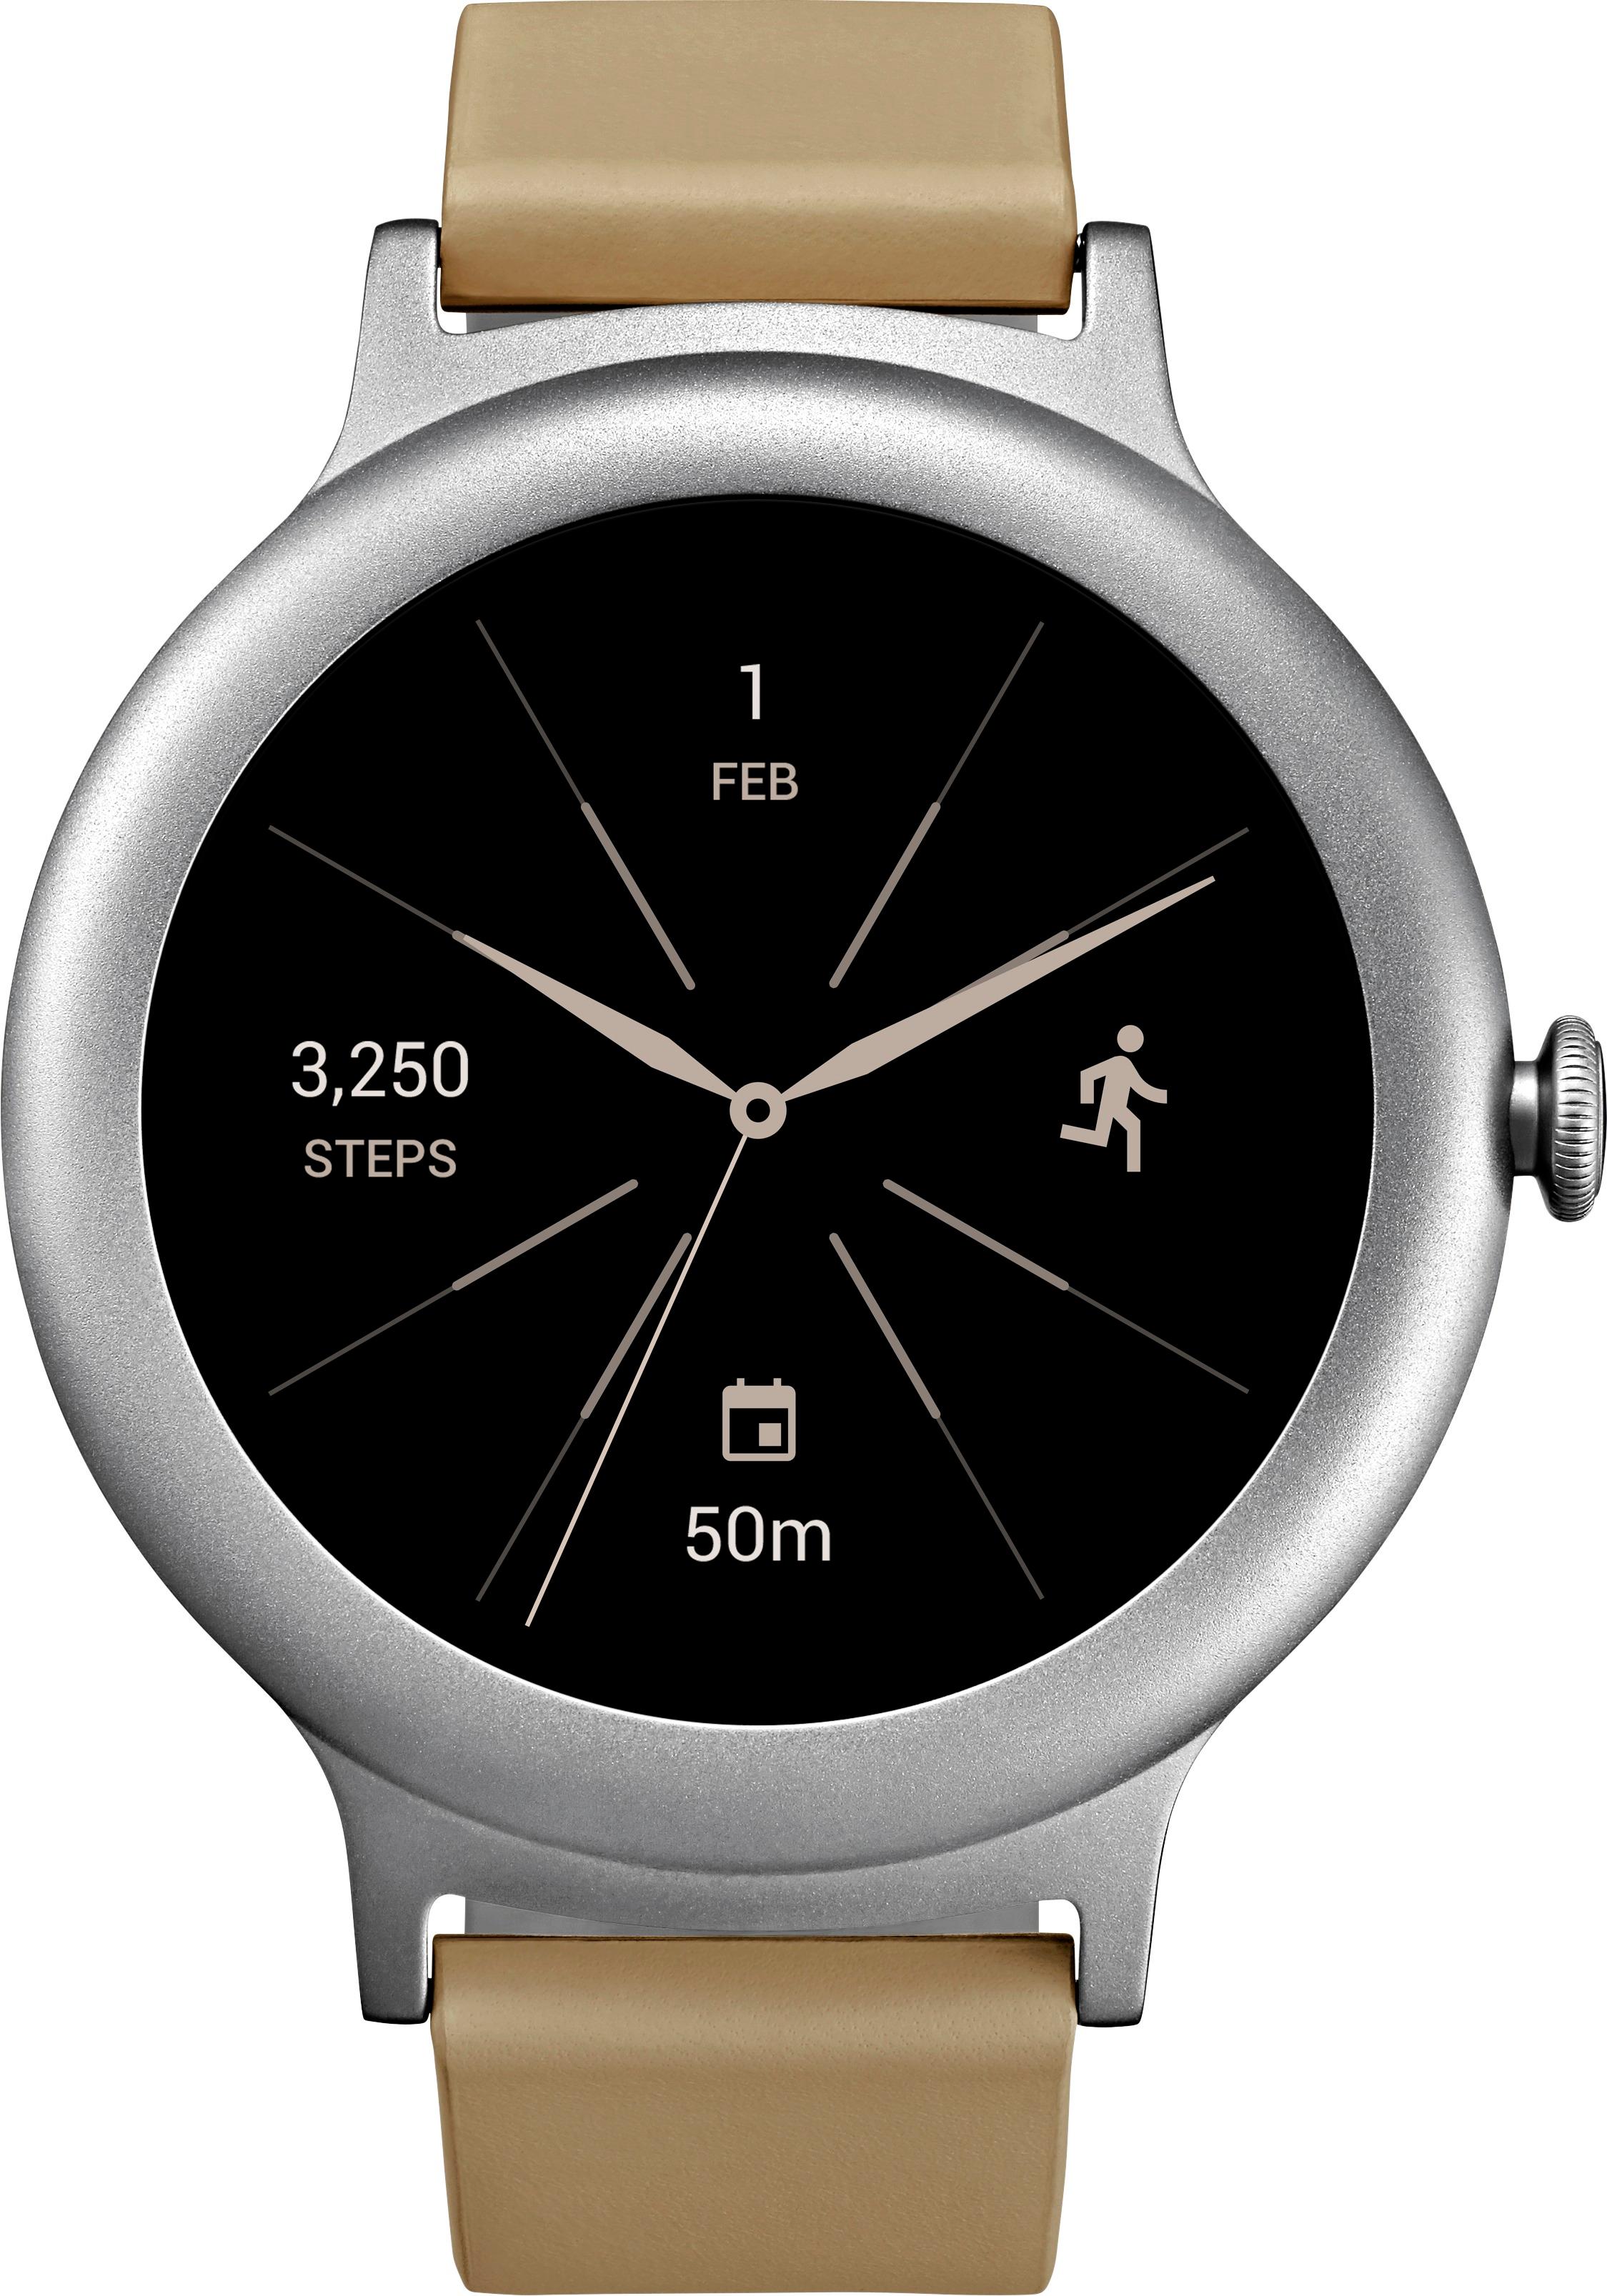 LG Watch Style Smartwatch 42.3mm 